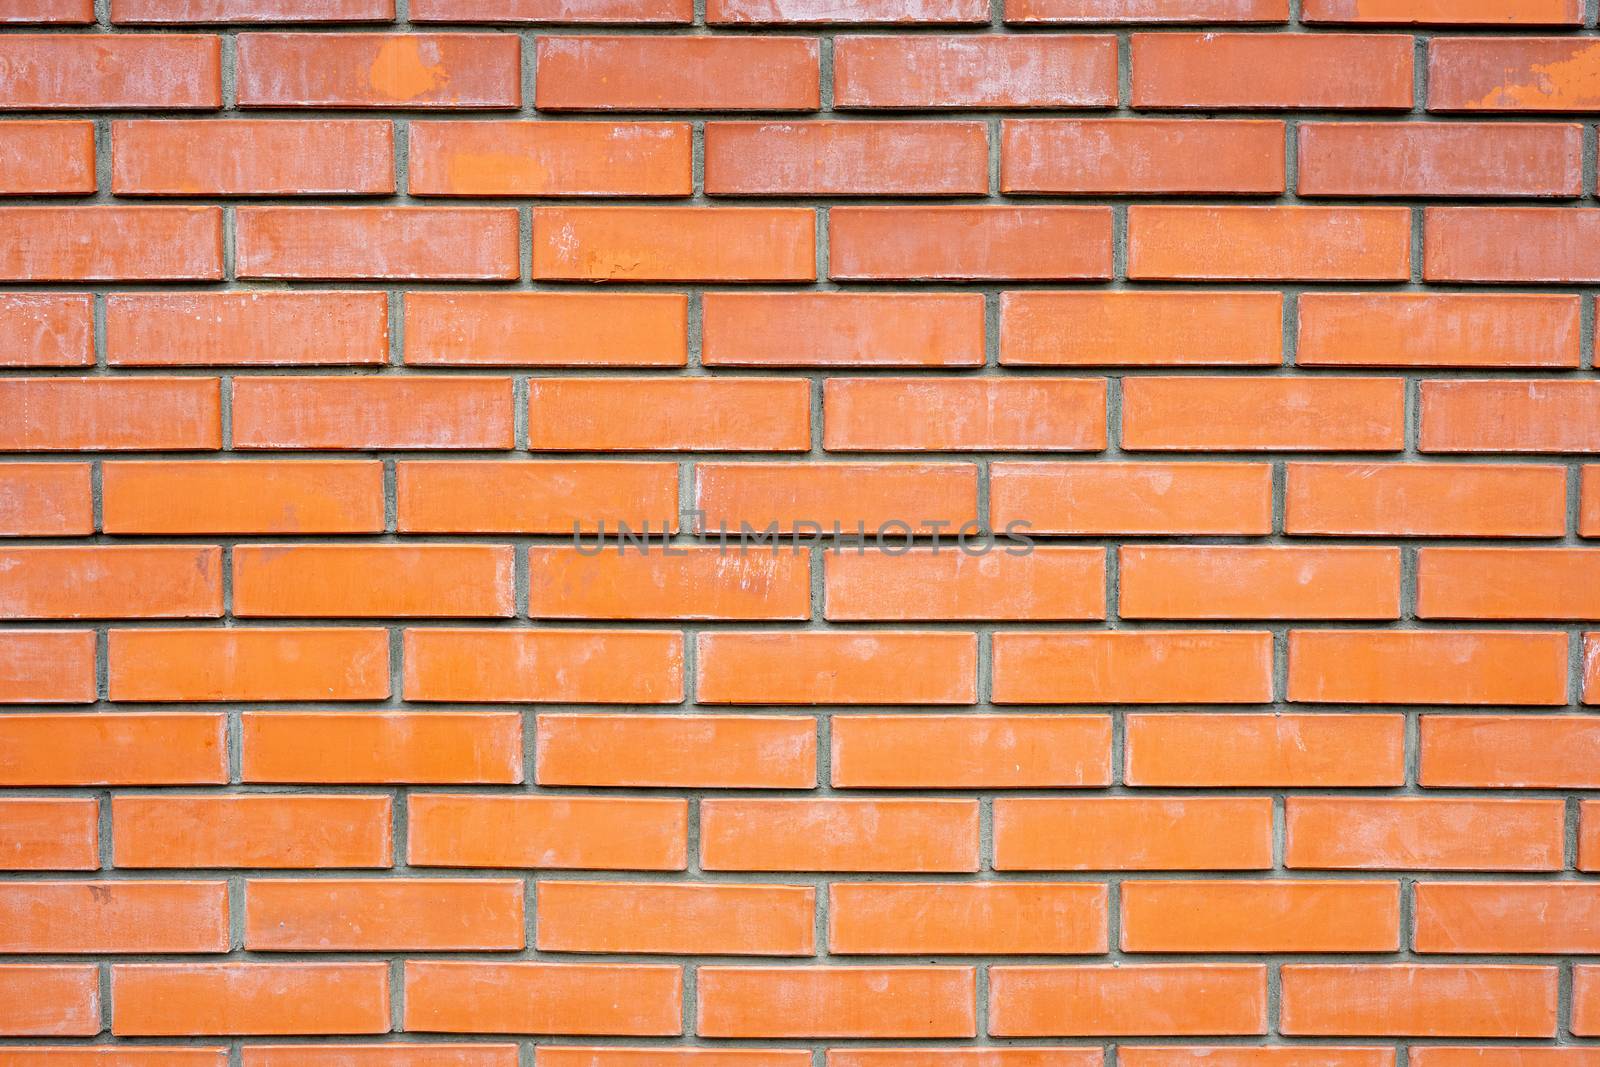 brick wall background. Wall of red flat brick by Serhii_Voroshchuk